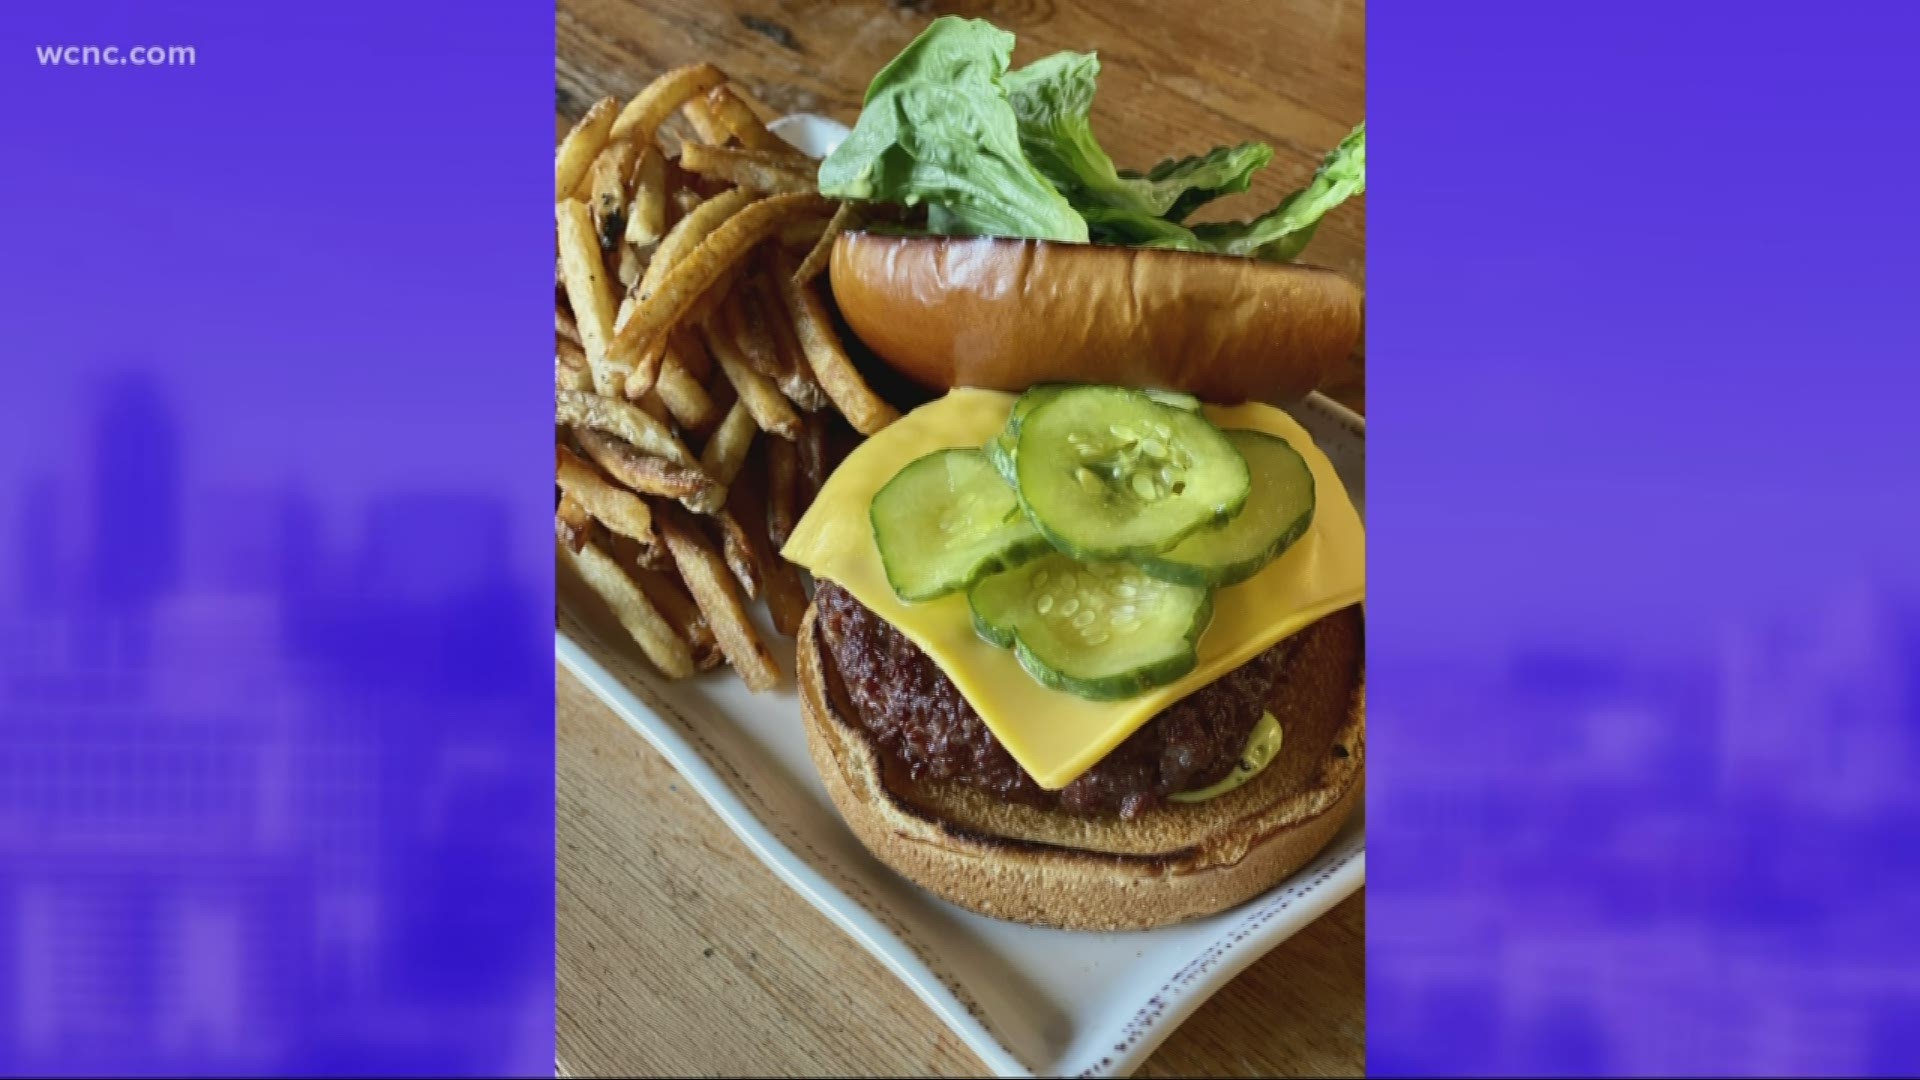 Food blogger Amy Strasser shares her 10 favorite burger joints in Charlotte.